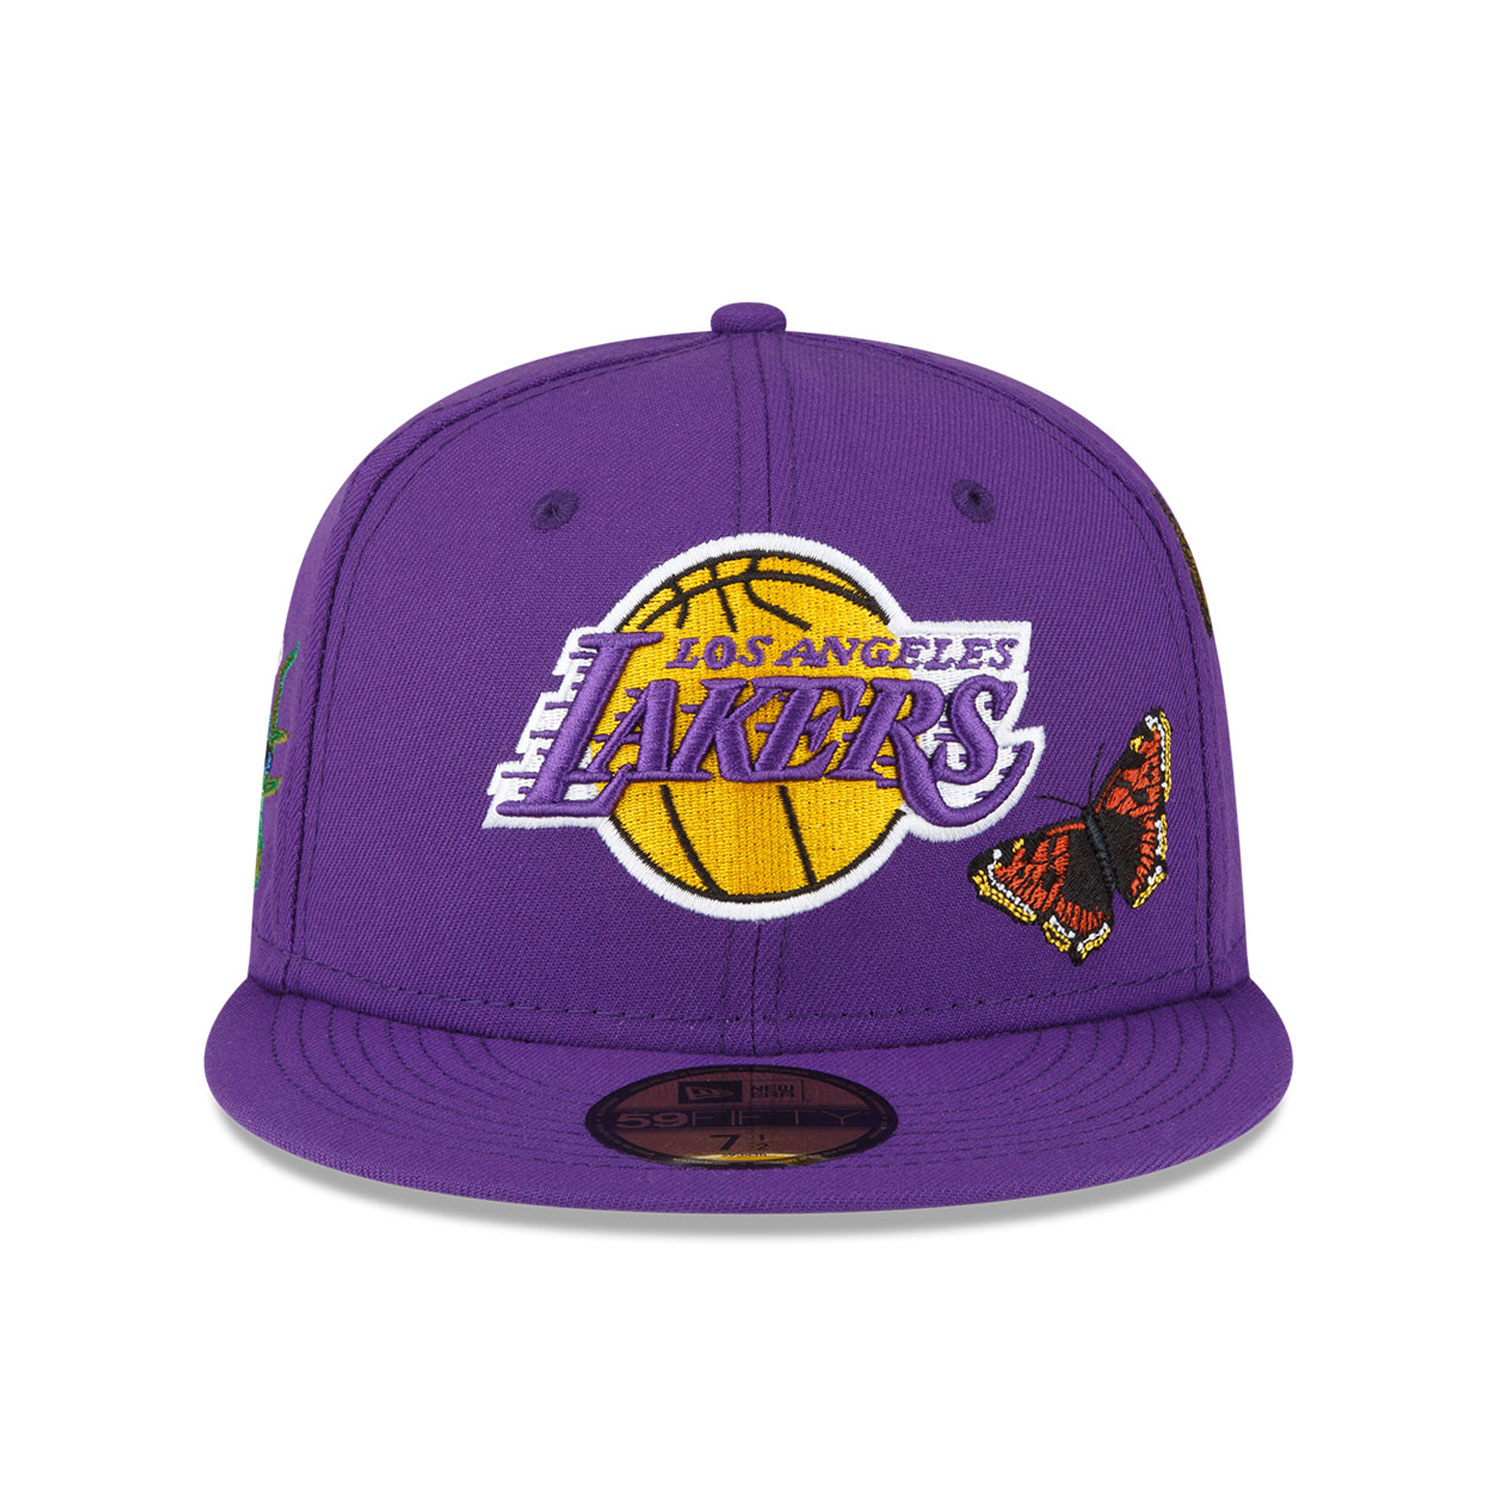 LA Lakers Felt x NBA Purple 59FIFTY Fitted Cap